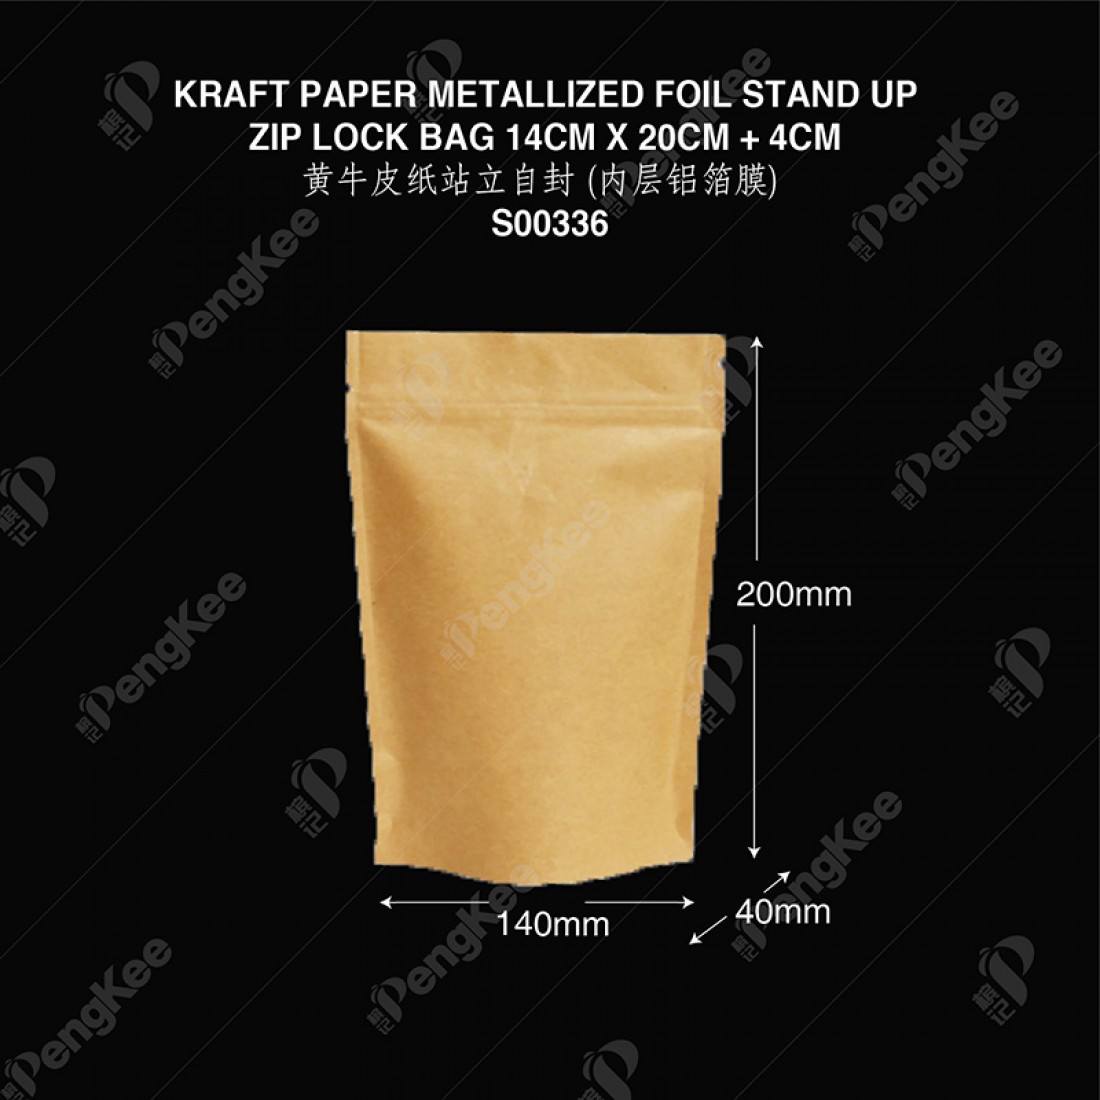 KRAFT PAPER METALLIZED FOIL STAND UP ZIP LOCK BAG 14CM X 20CM + 4CM 黄牛皮纸站立自封 (内层铝箔膜)  (50'S)